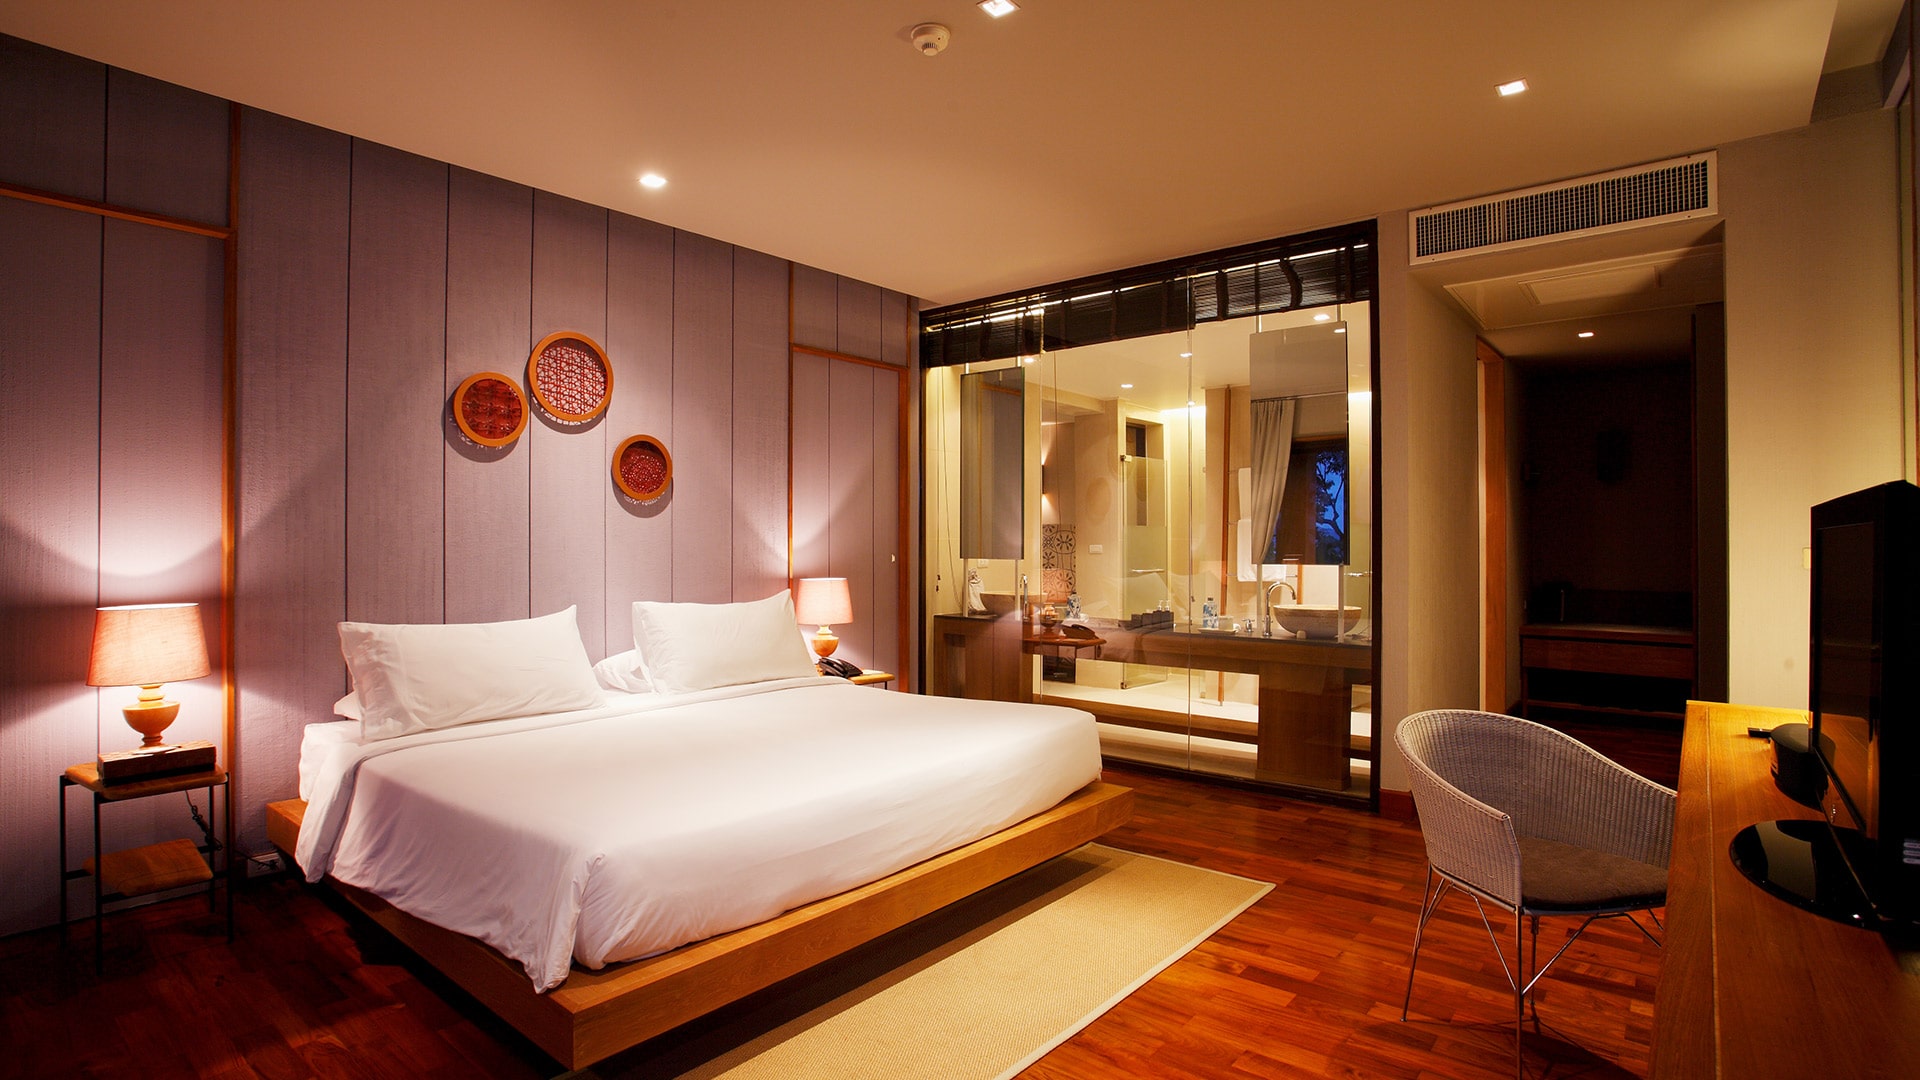 family vacations in phuket four bedroom residence villa luxury hotels resort thailand